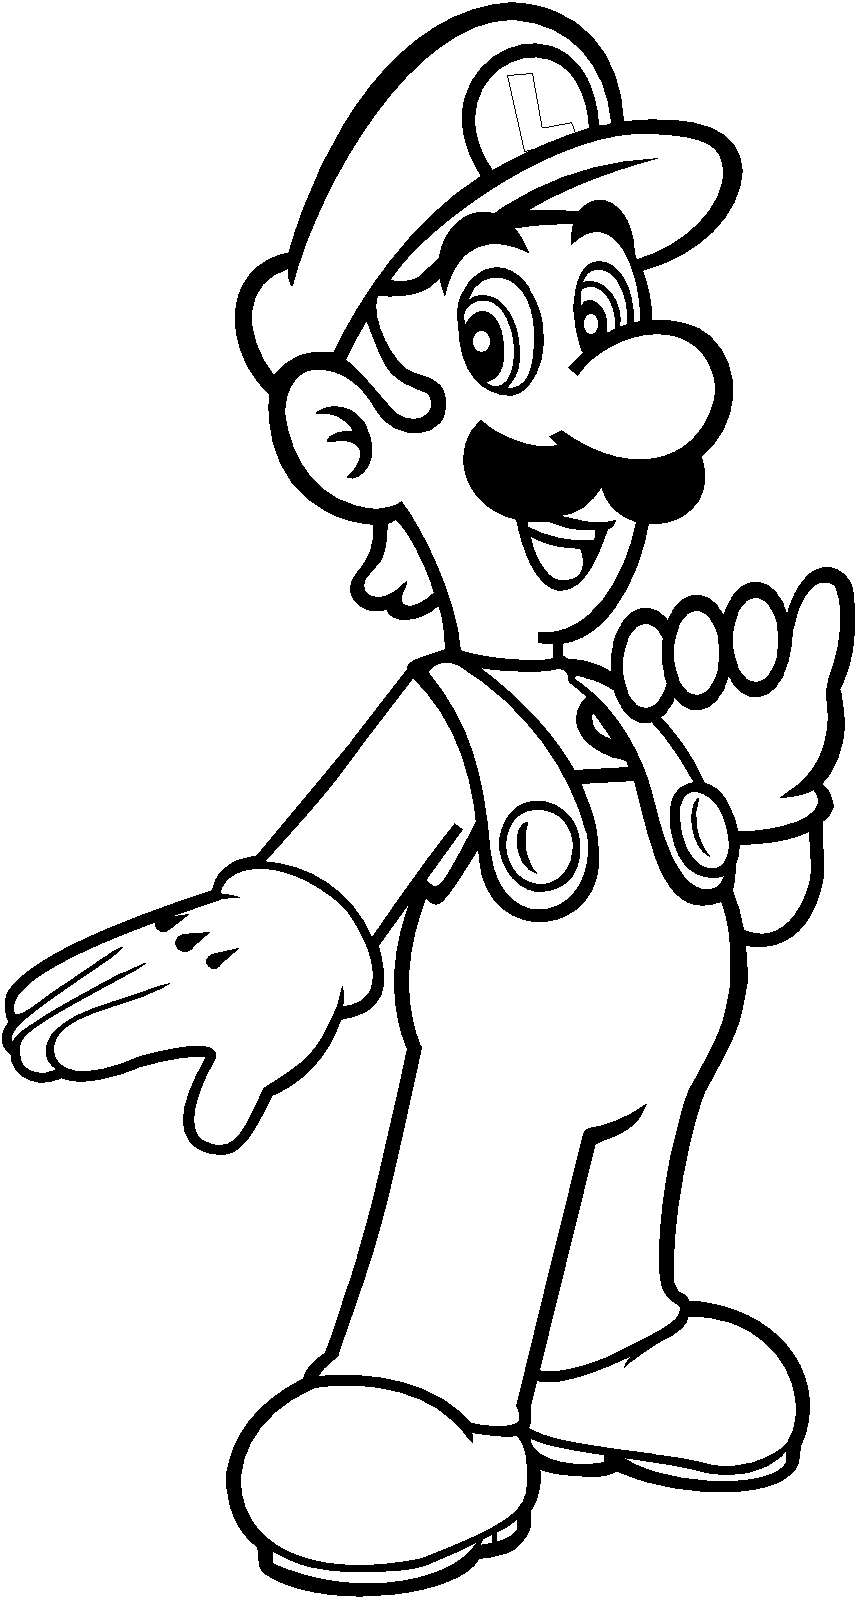 Luigi Coloring By Blistinaorgin On Deviantart Super Mario Coloring Pages Mario Colori